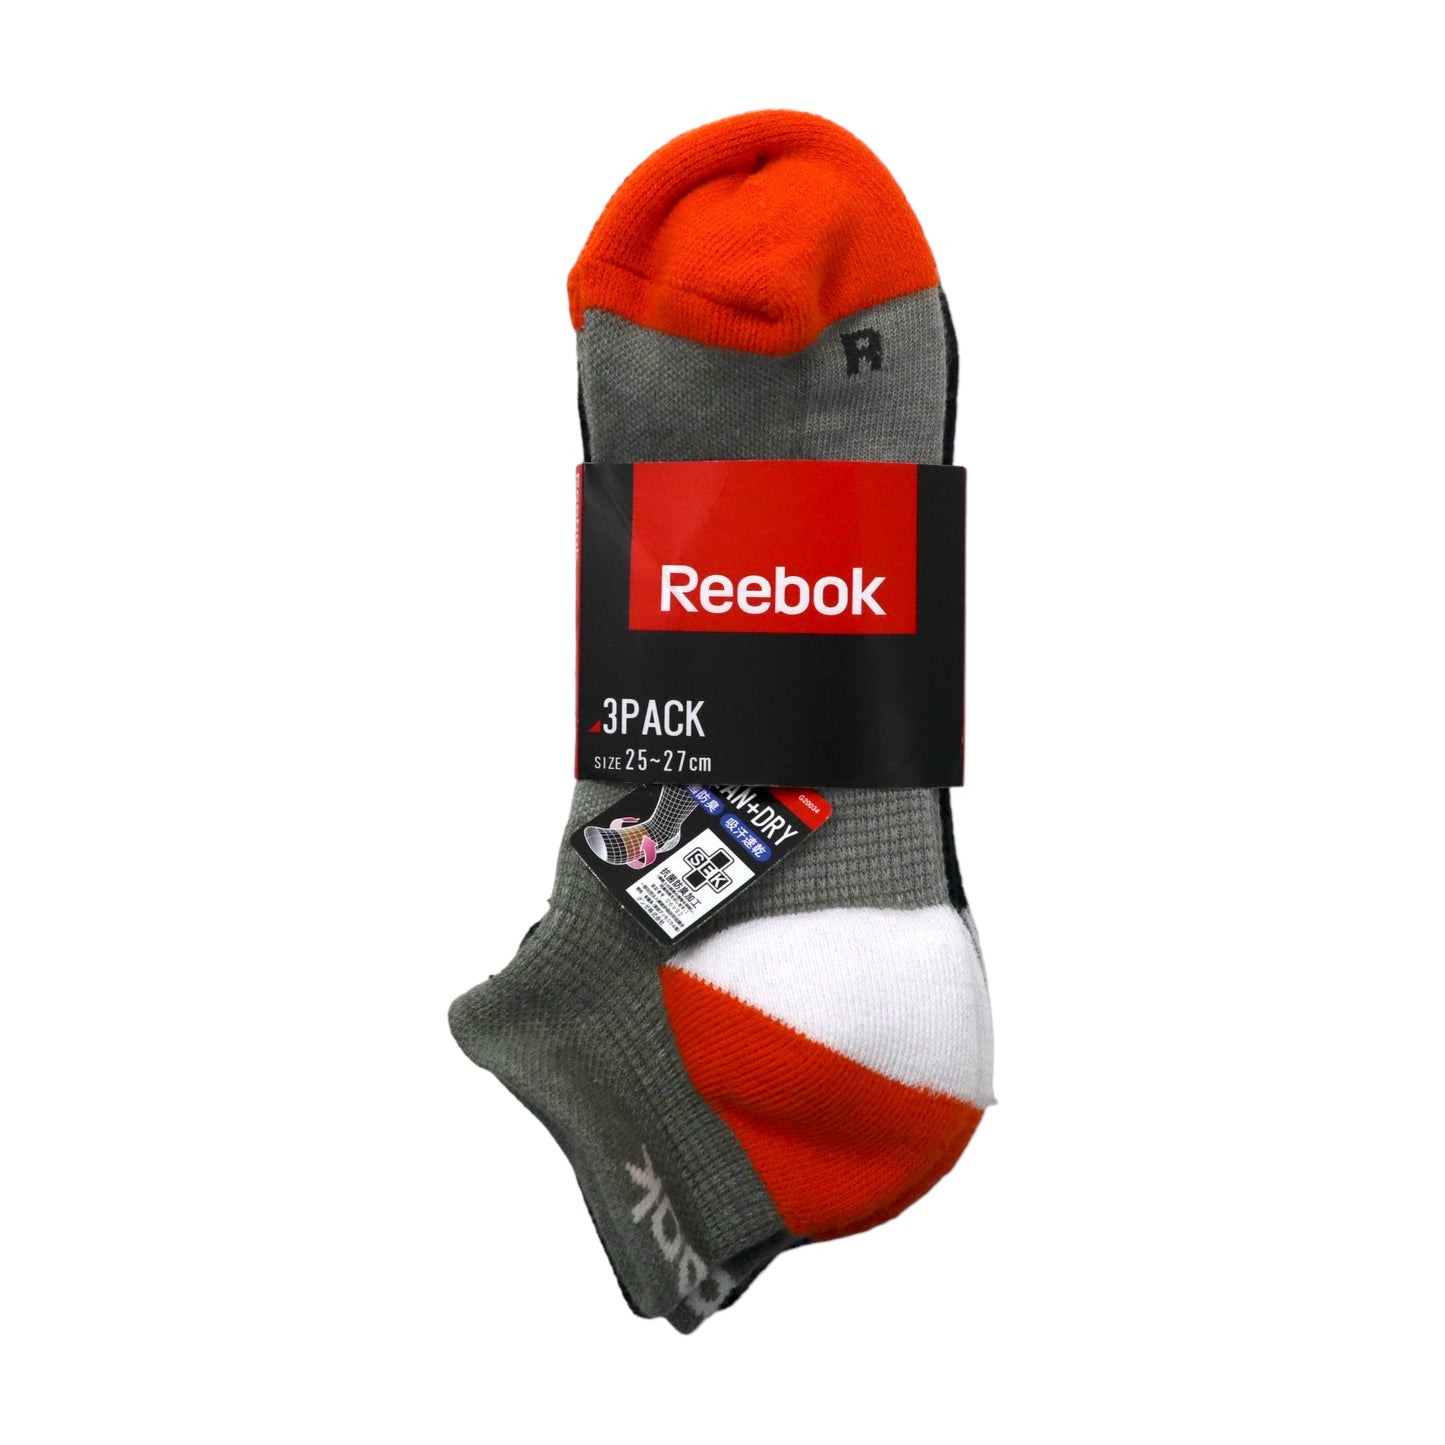 Reebok グンゼ 3足セット 靴下 ソックス 25-27cm くるぶし丈 抗菌防臭 CLEAN+DRY 未使用品